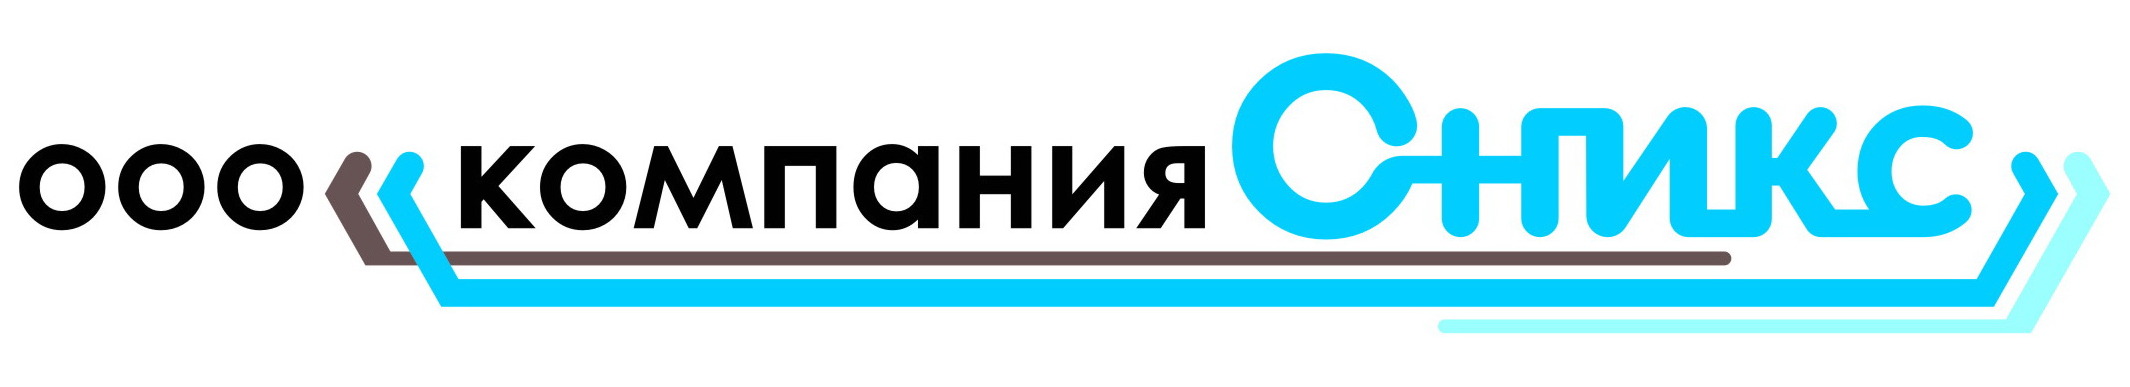 ООО «Компания Оникс», логотип